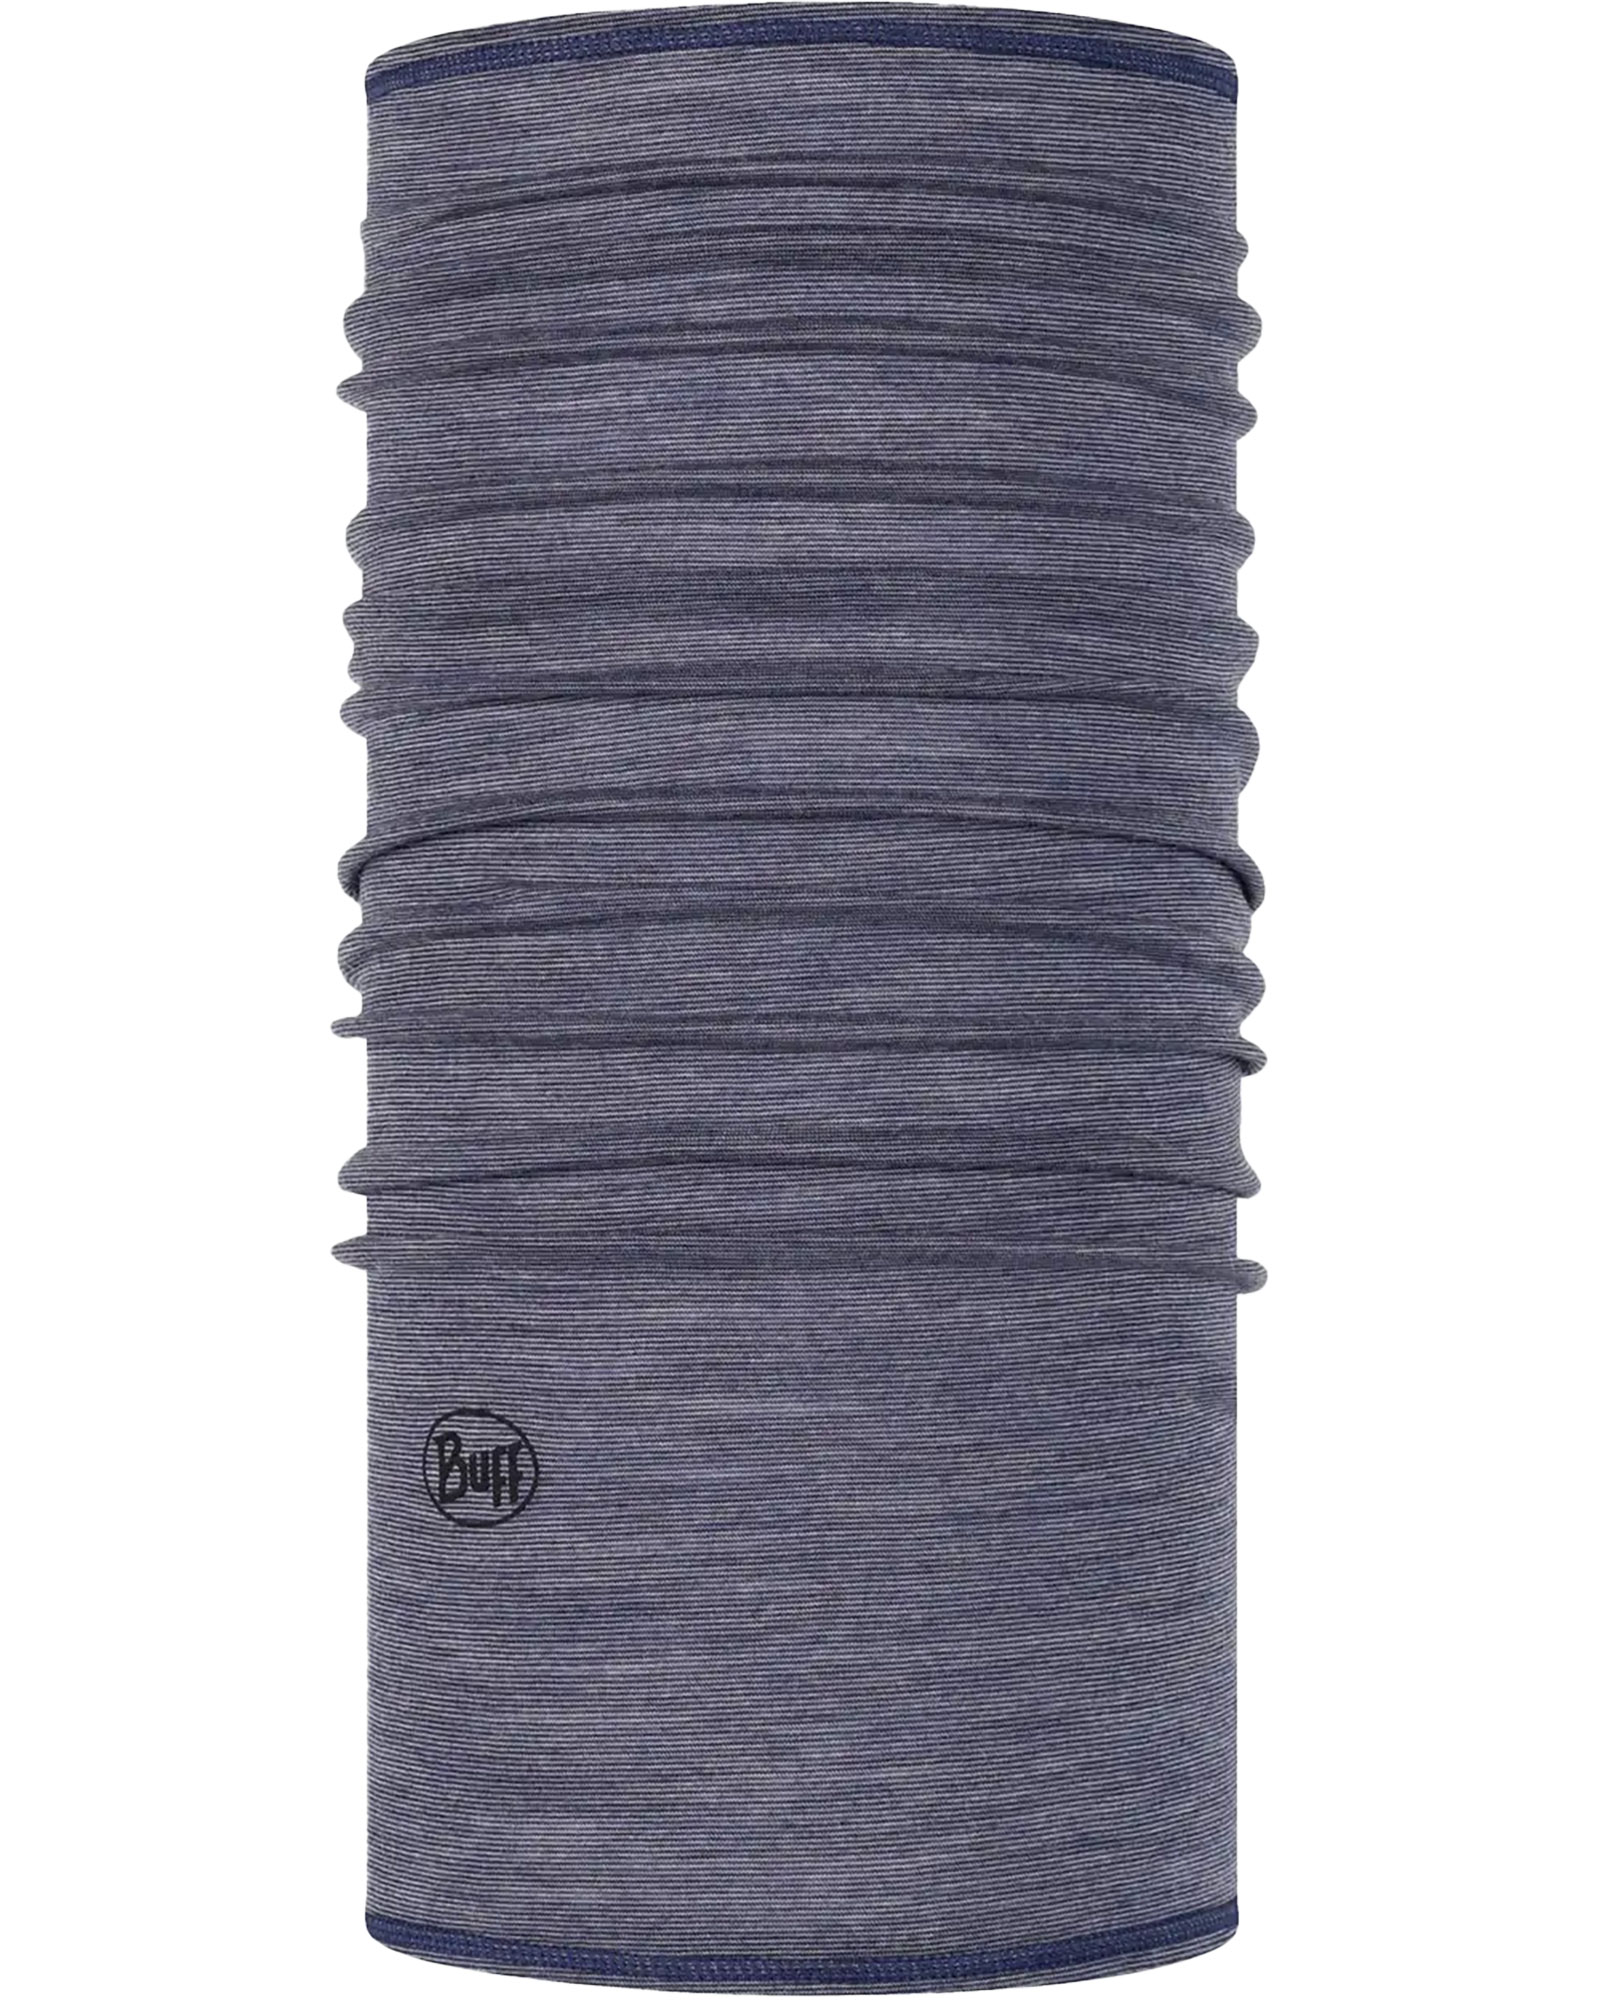 Buff Merino Wool 125 Lightweight Neck Warmer   Light Denim Multistripes - Light Denim Multistripes